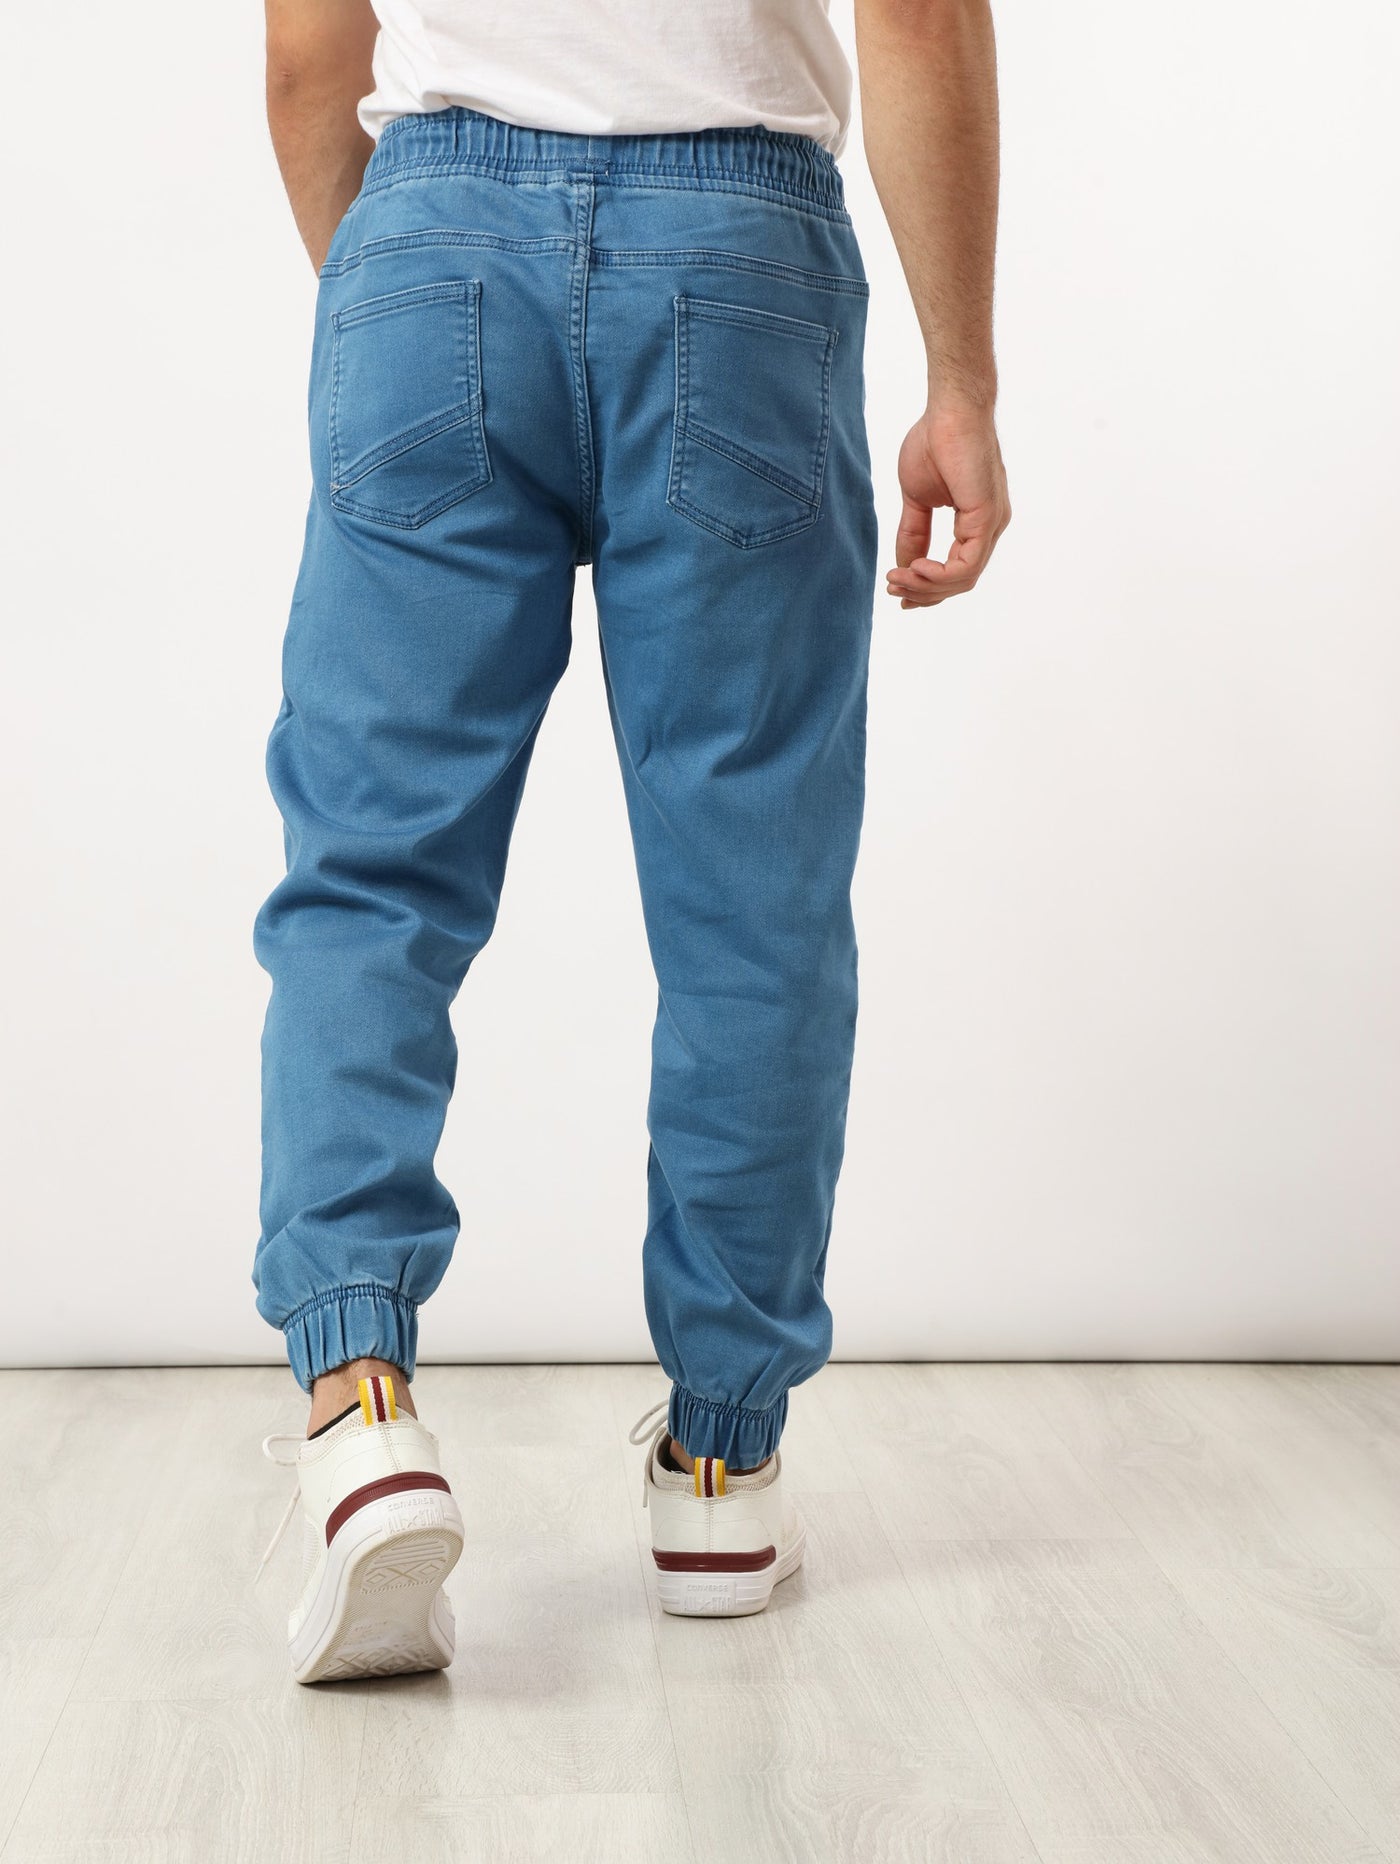 Pants - Elasticated Hem - Side Pocket